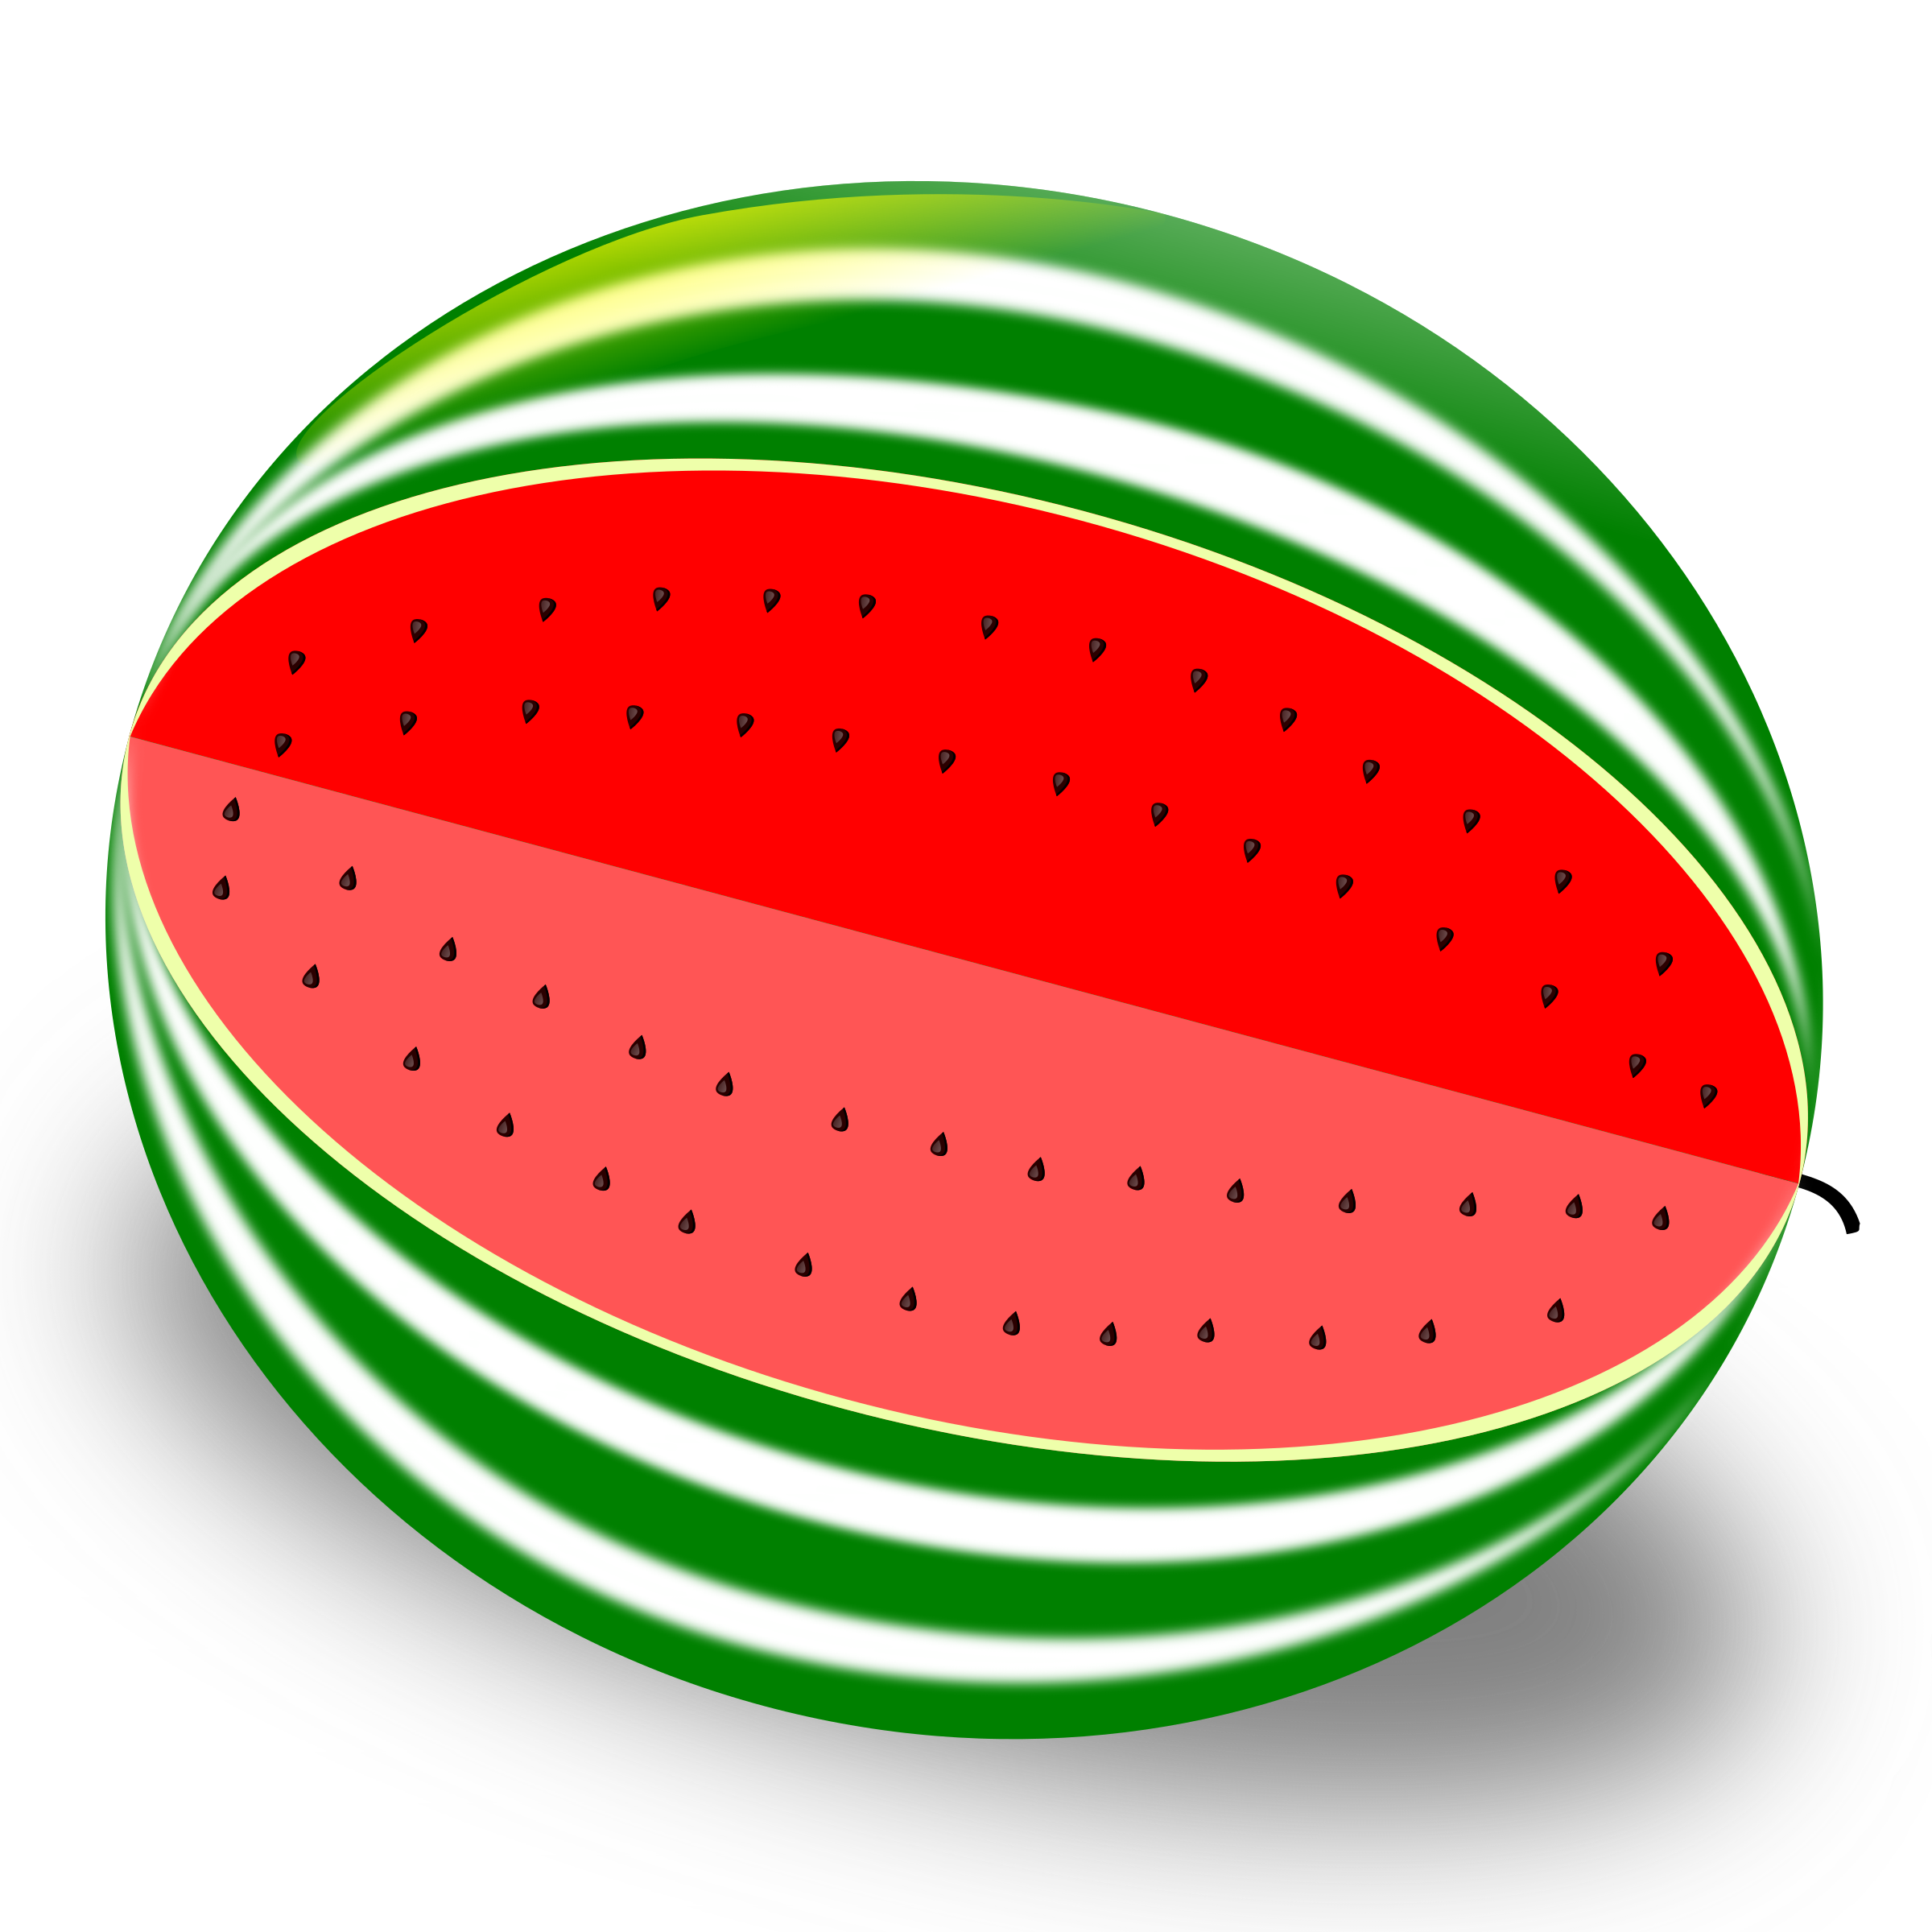 Download Watermelon Vector clipart image - Free stock photo - Public Domain photo - CC0 Images